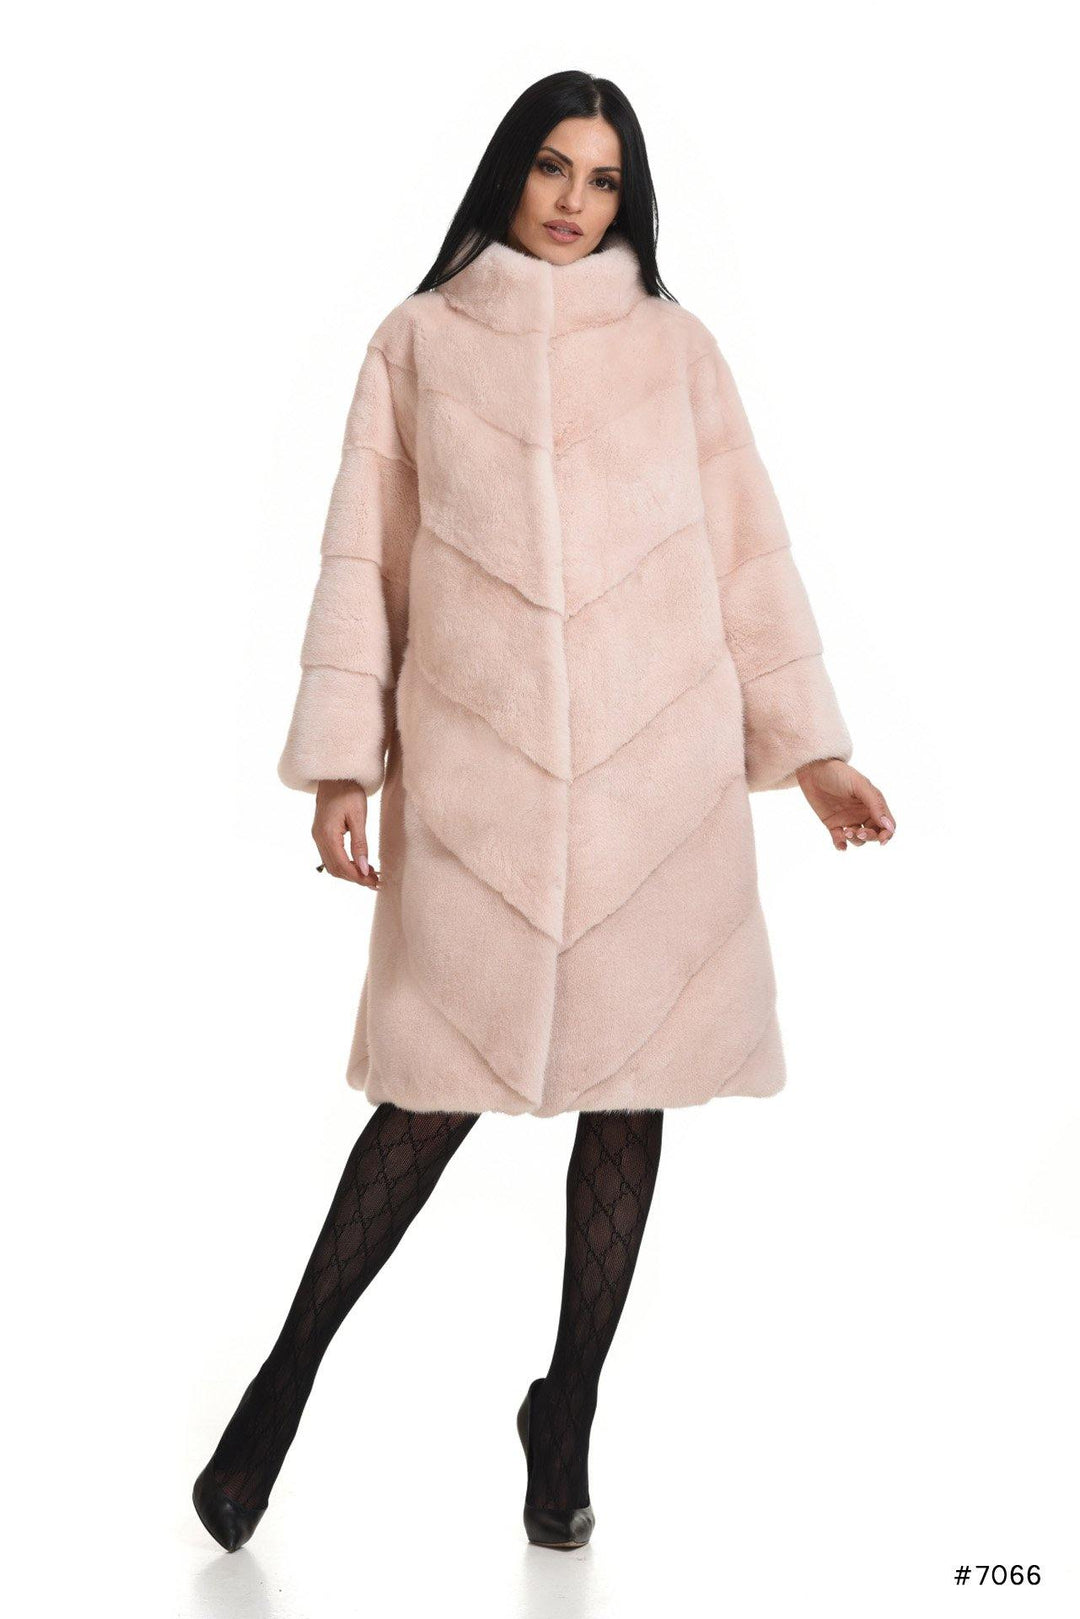 Classy mink coat with stand up collar - Manakas Frankfurt